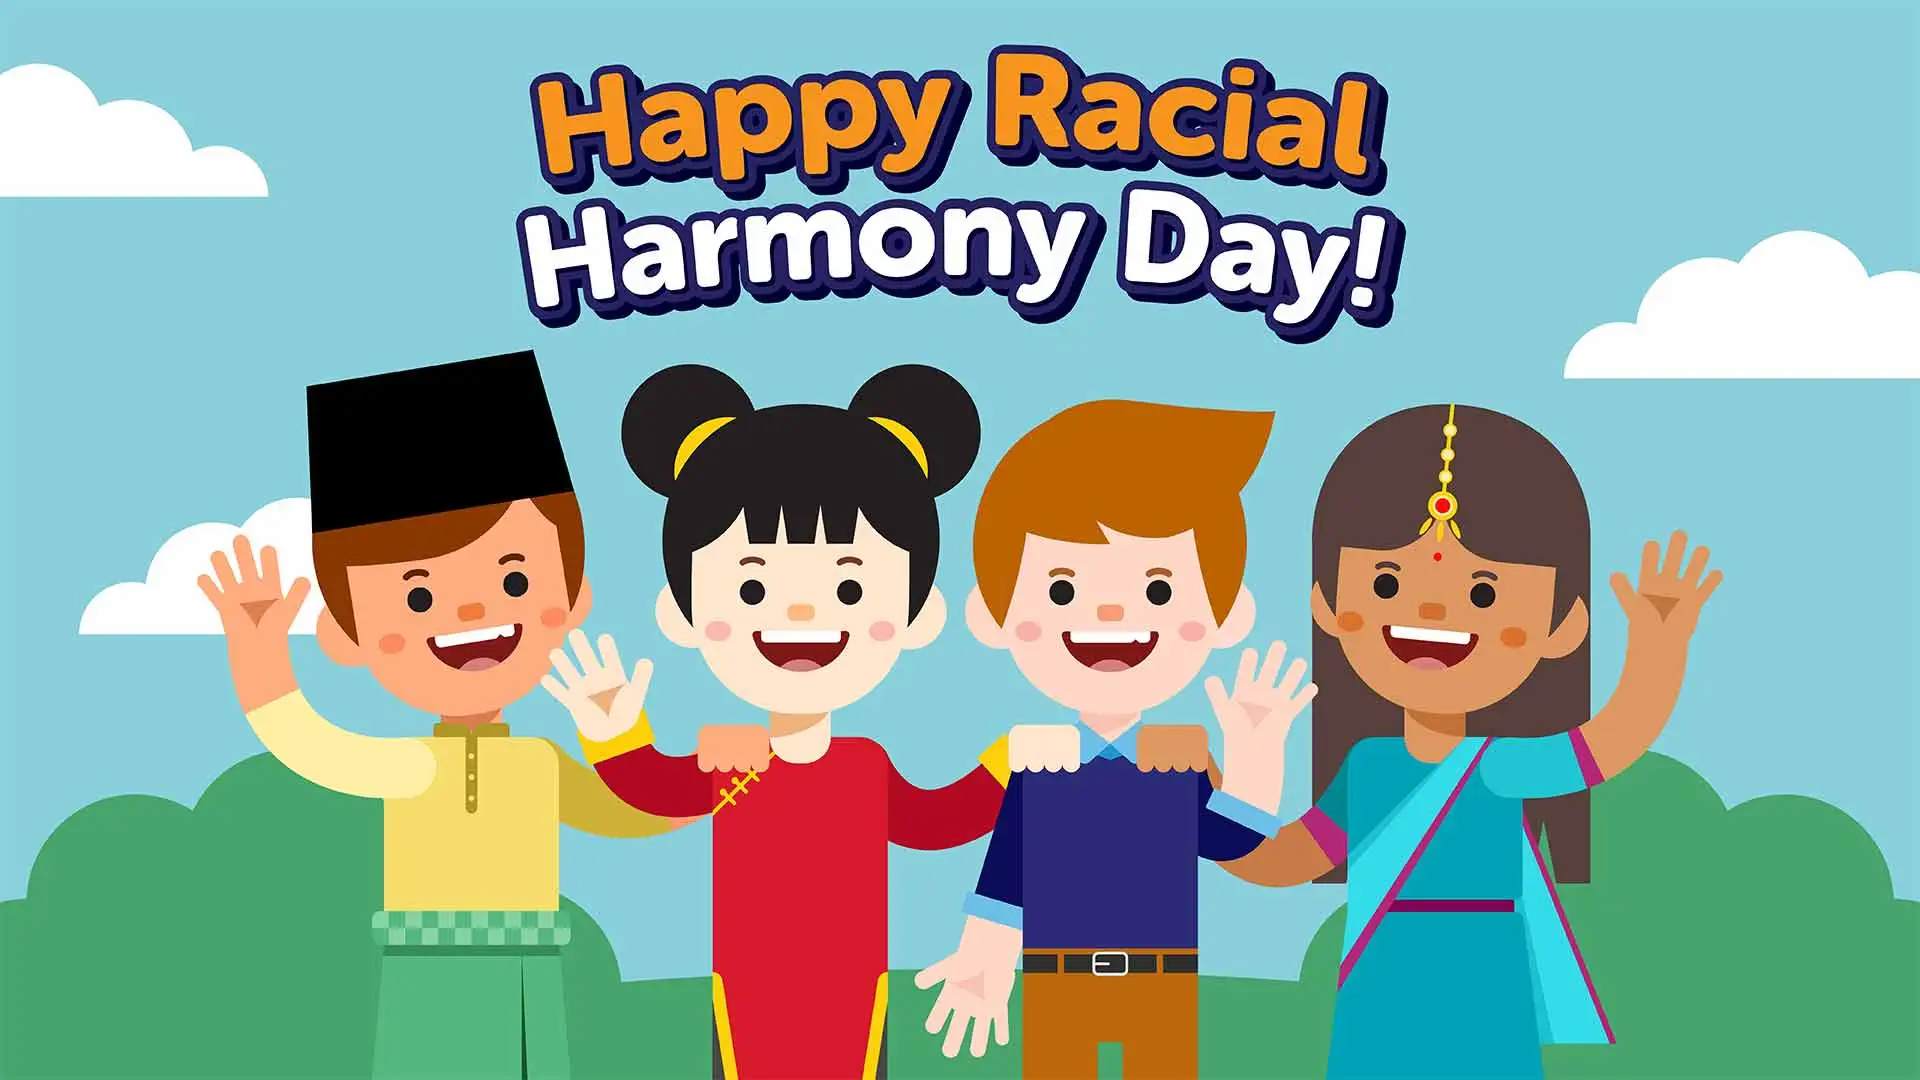 Celebrating unity with Racial Harmony Day